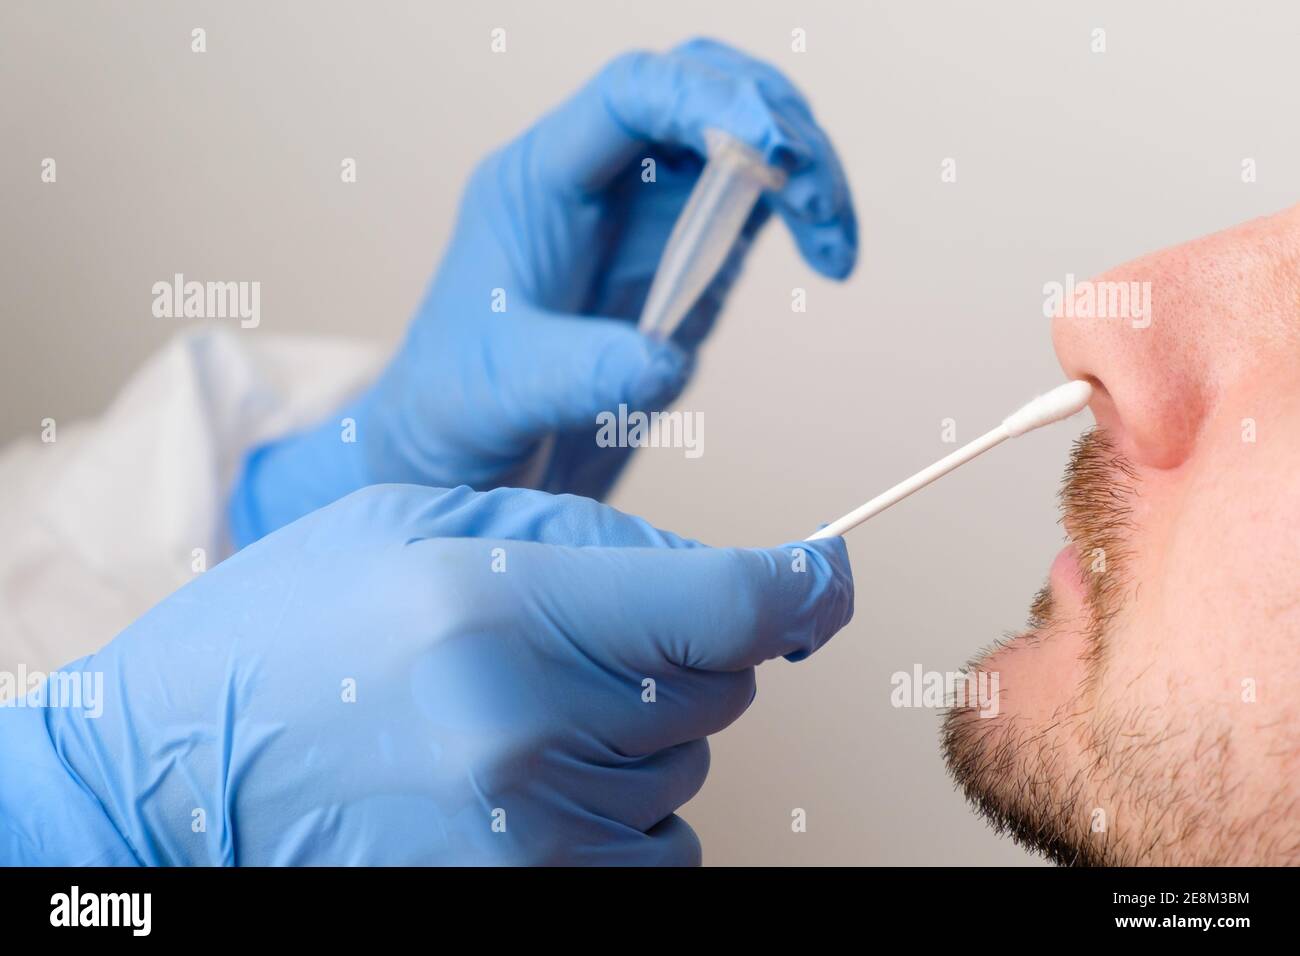 Coronavirus test. Medical worker or nurse taking a nasal swab for coronavirus sample from patient Stock Photo